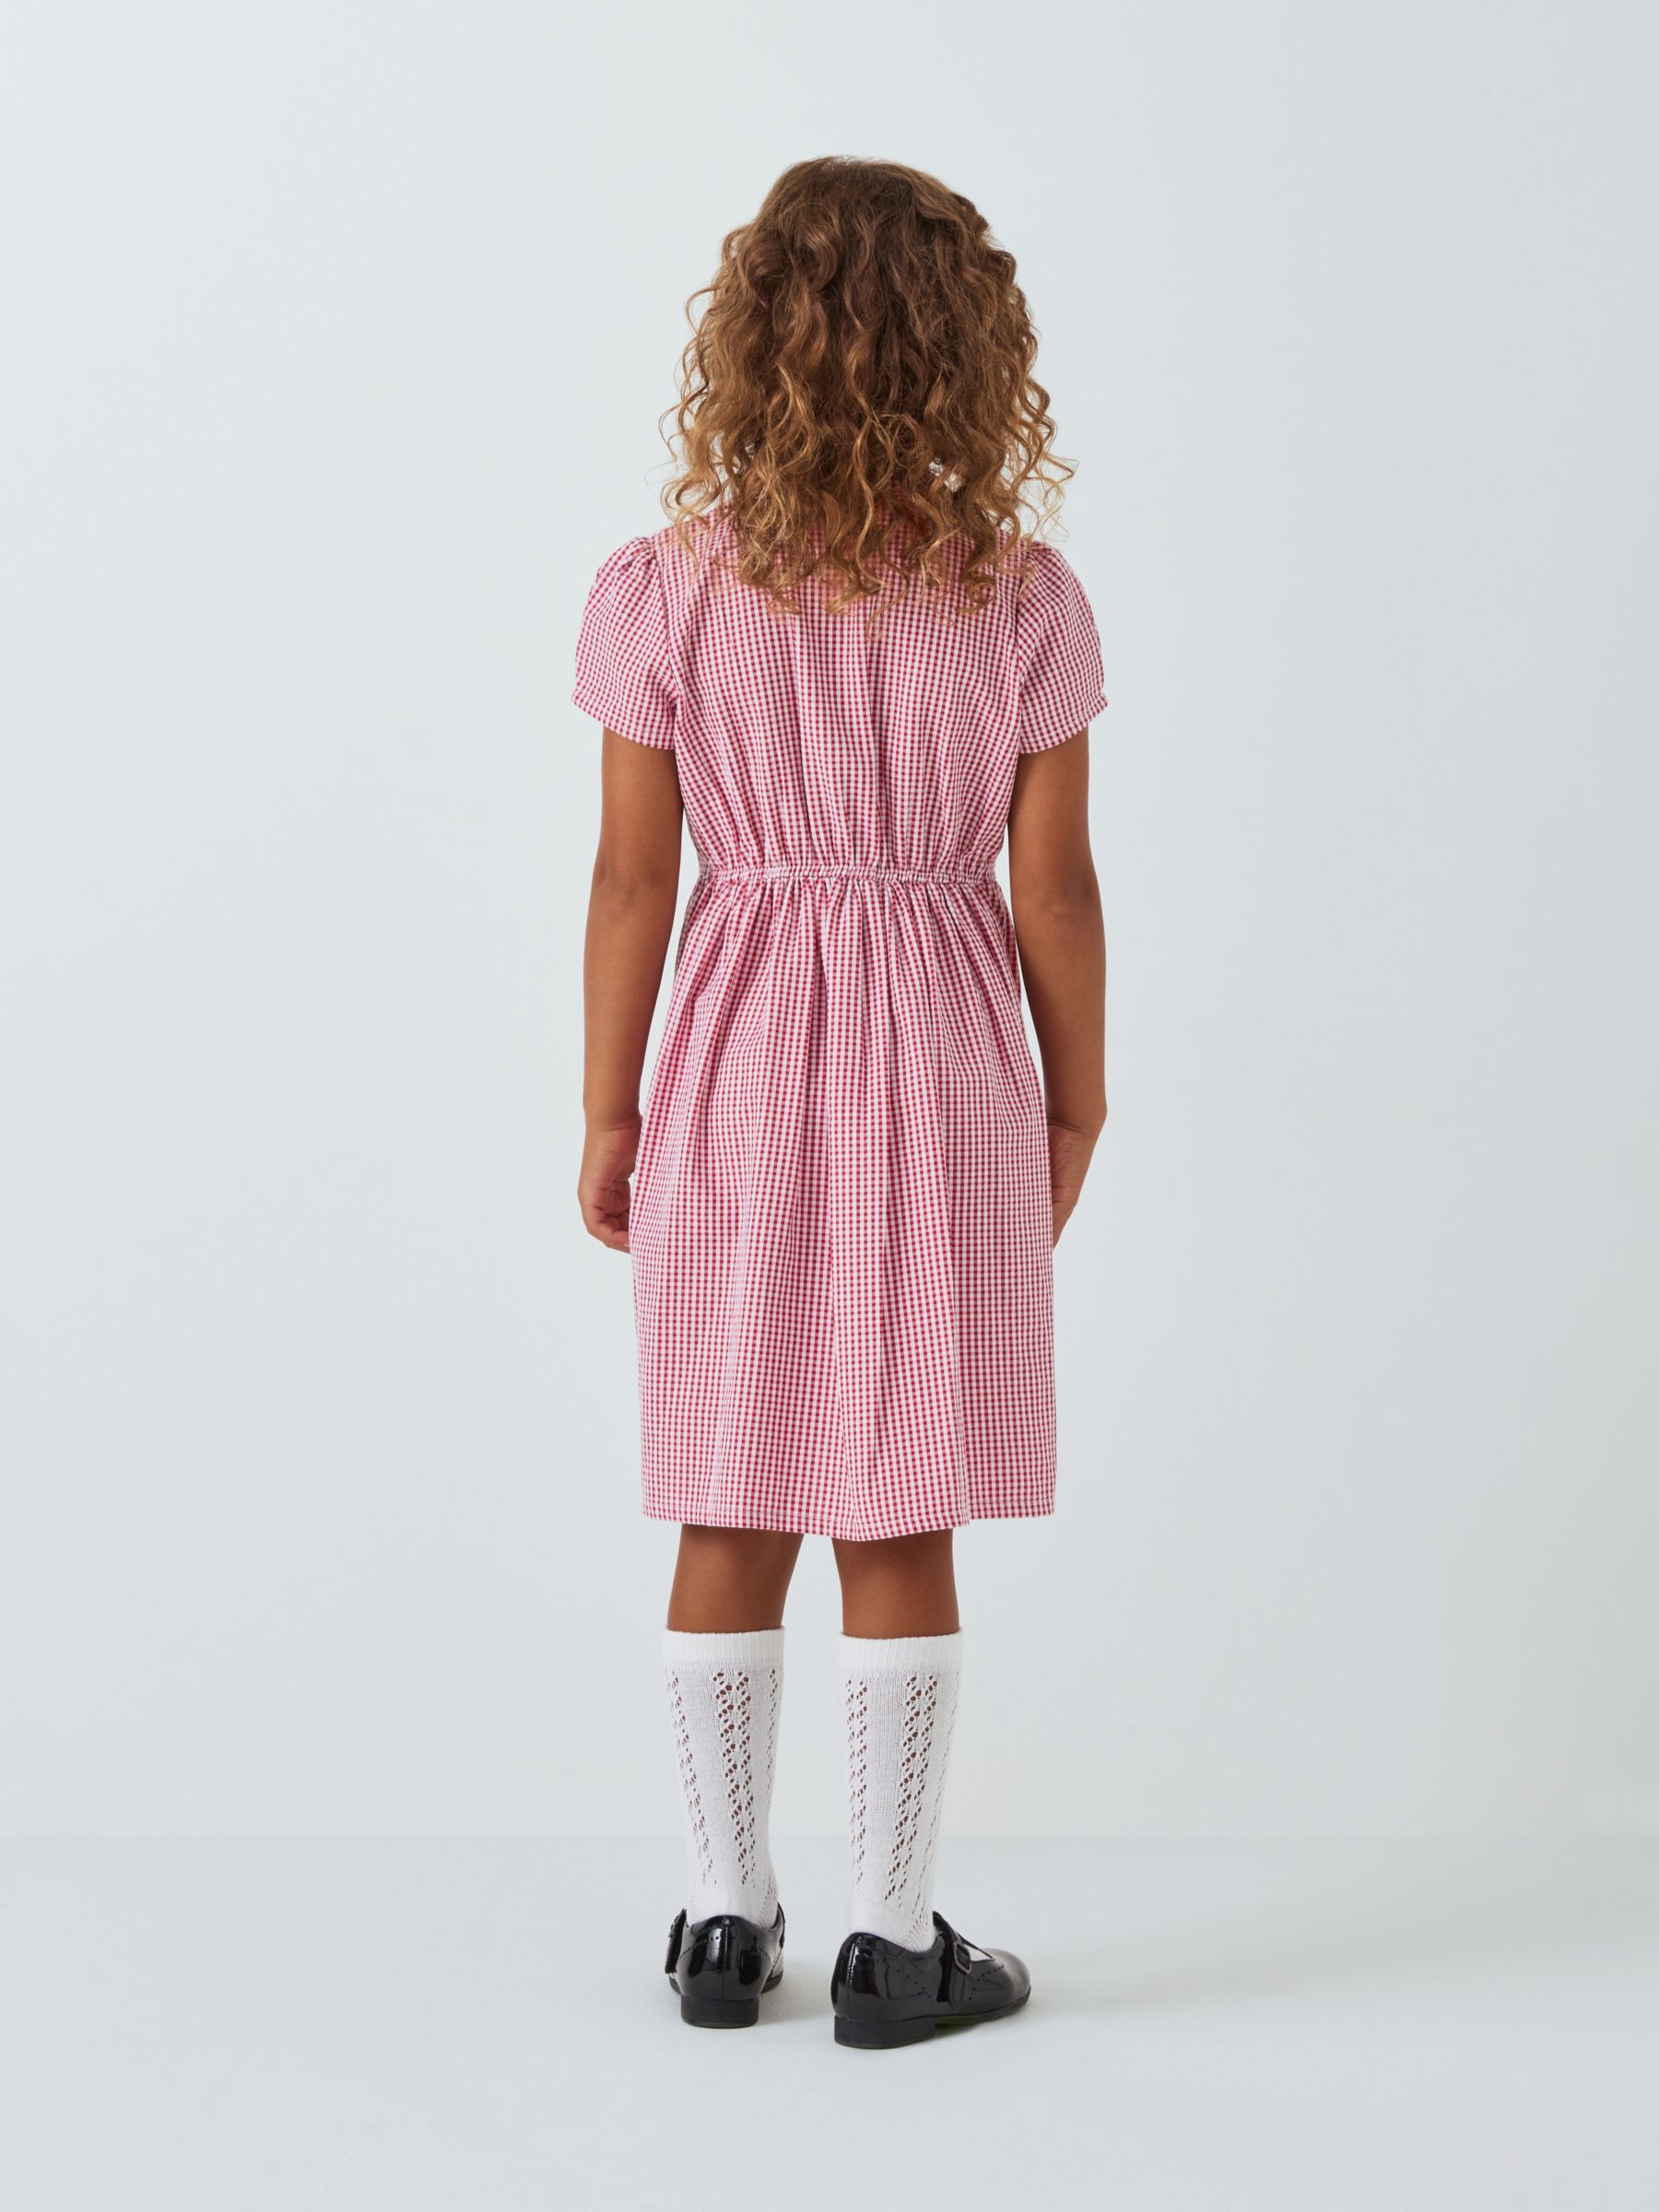 Buy John Lewis ANYDAY Kids' Gingham School Summer Dress, Pack of 2 Online at johnlewis.com